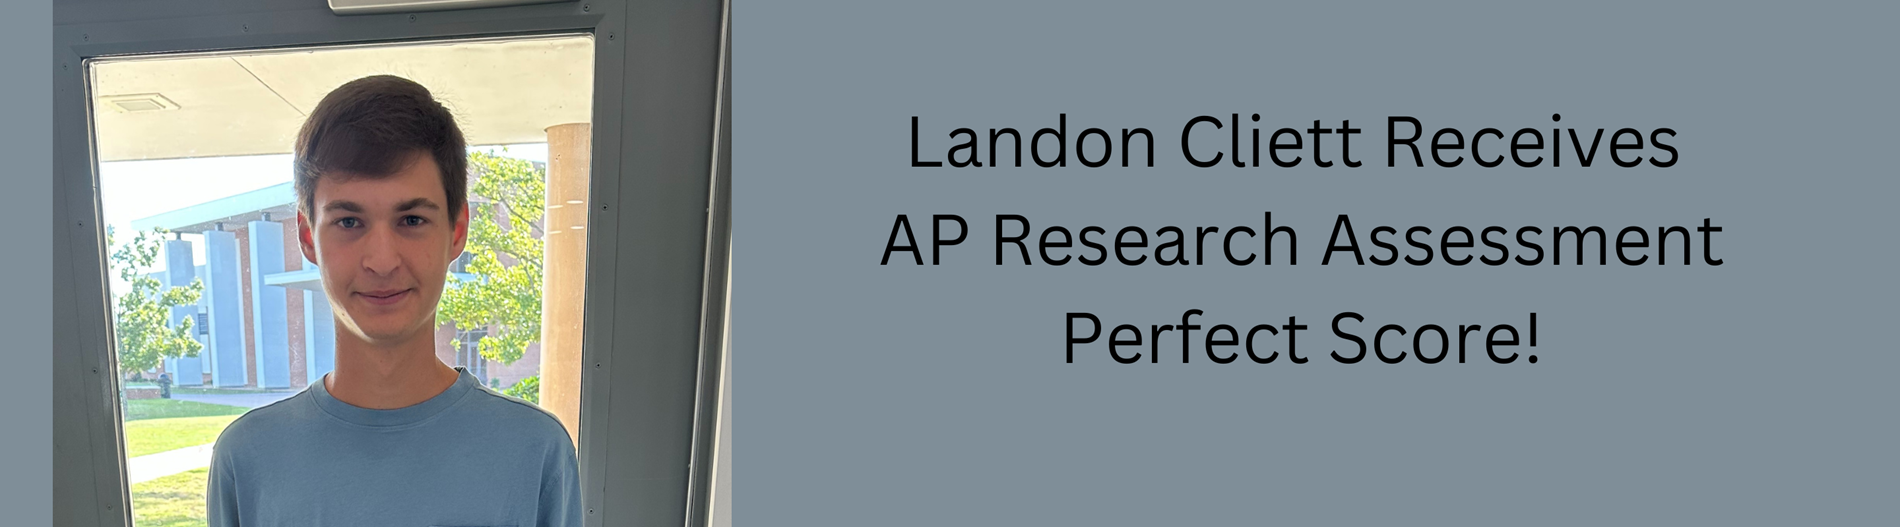 Landon Cliett Received AP Research Assessment Perfect Score